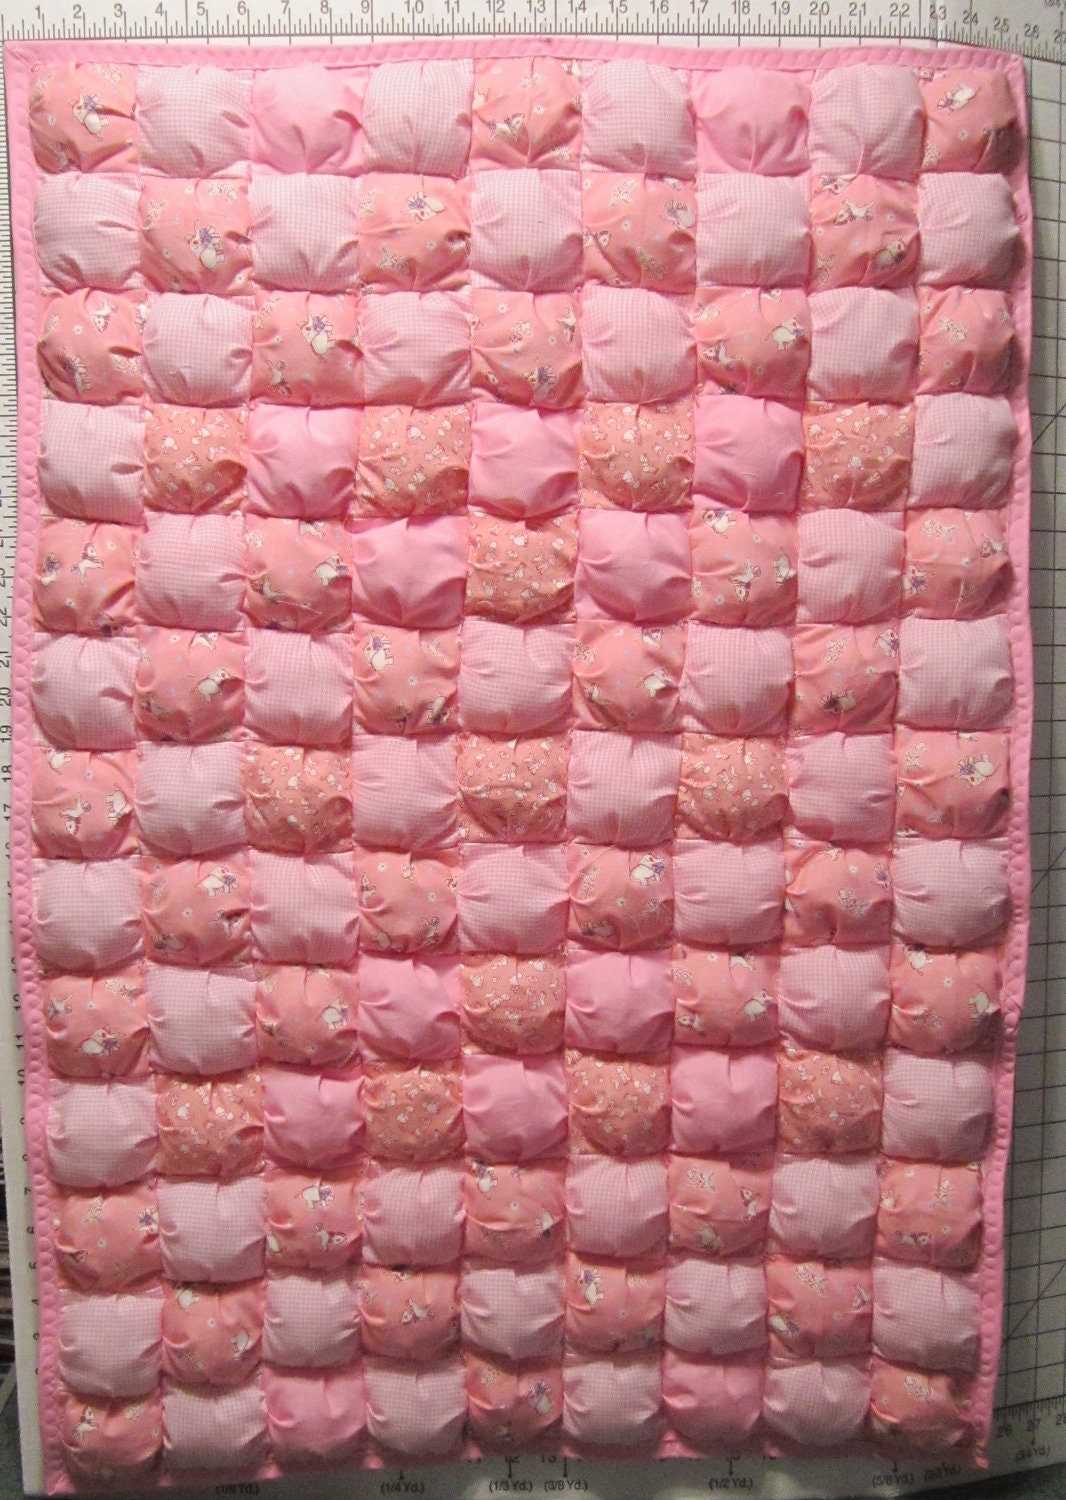 pink puffs